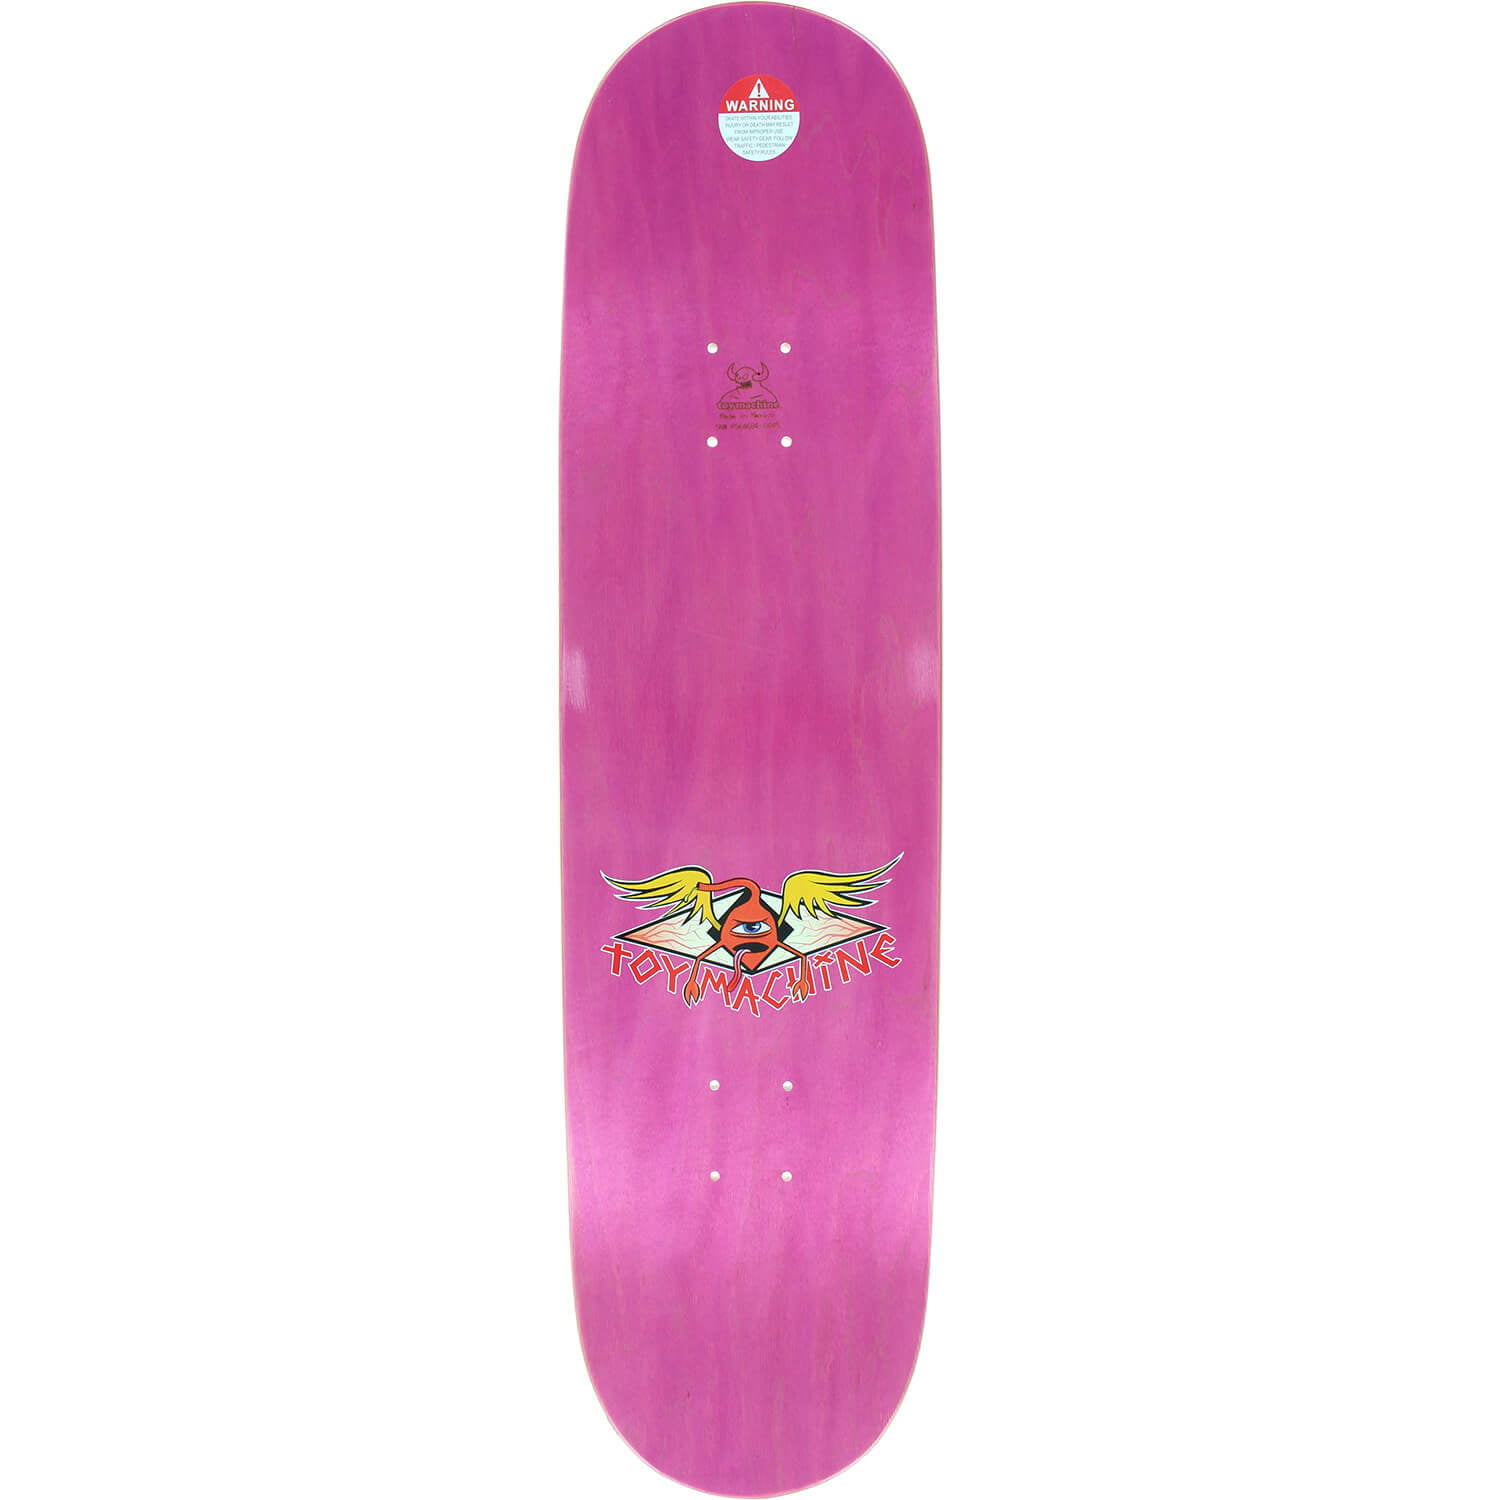 TOY MACHINE Skateboard Deck PIZZA SHREDDER SECT 7.75" Black Magic Grip 